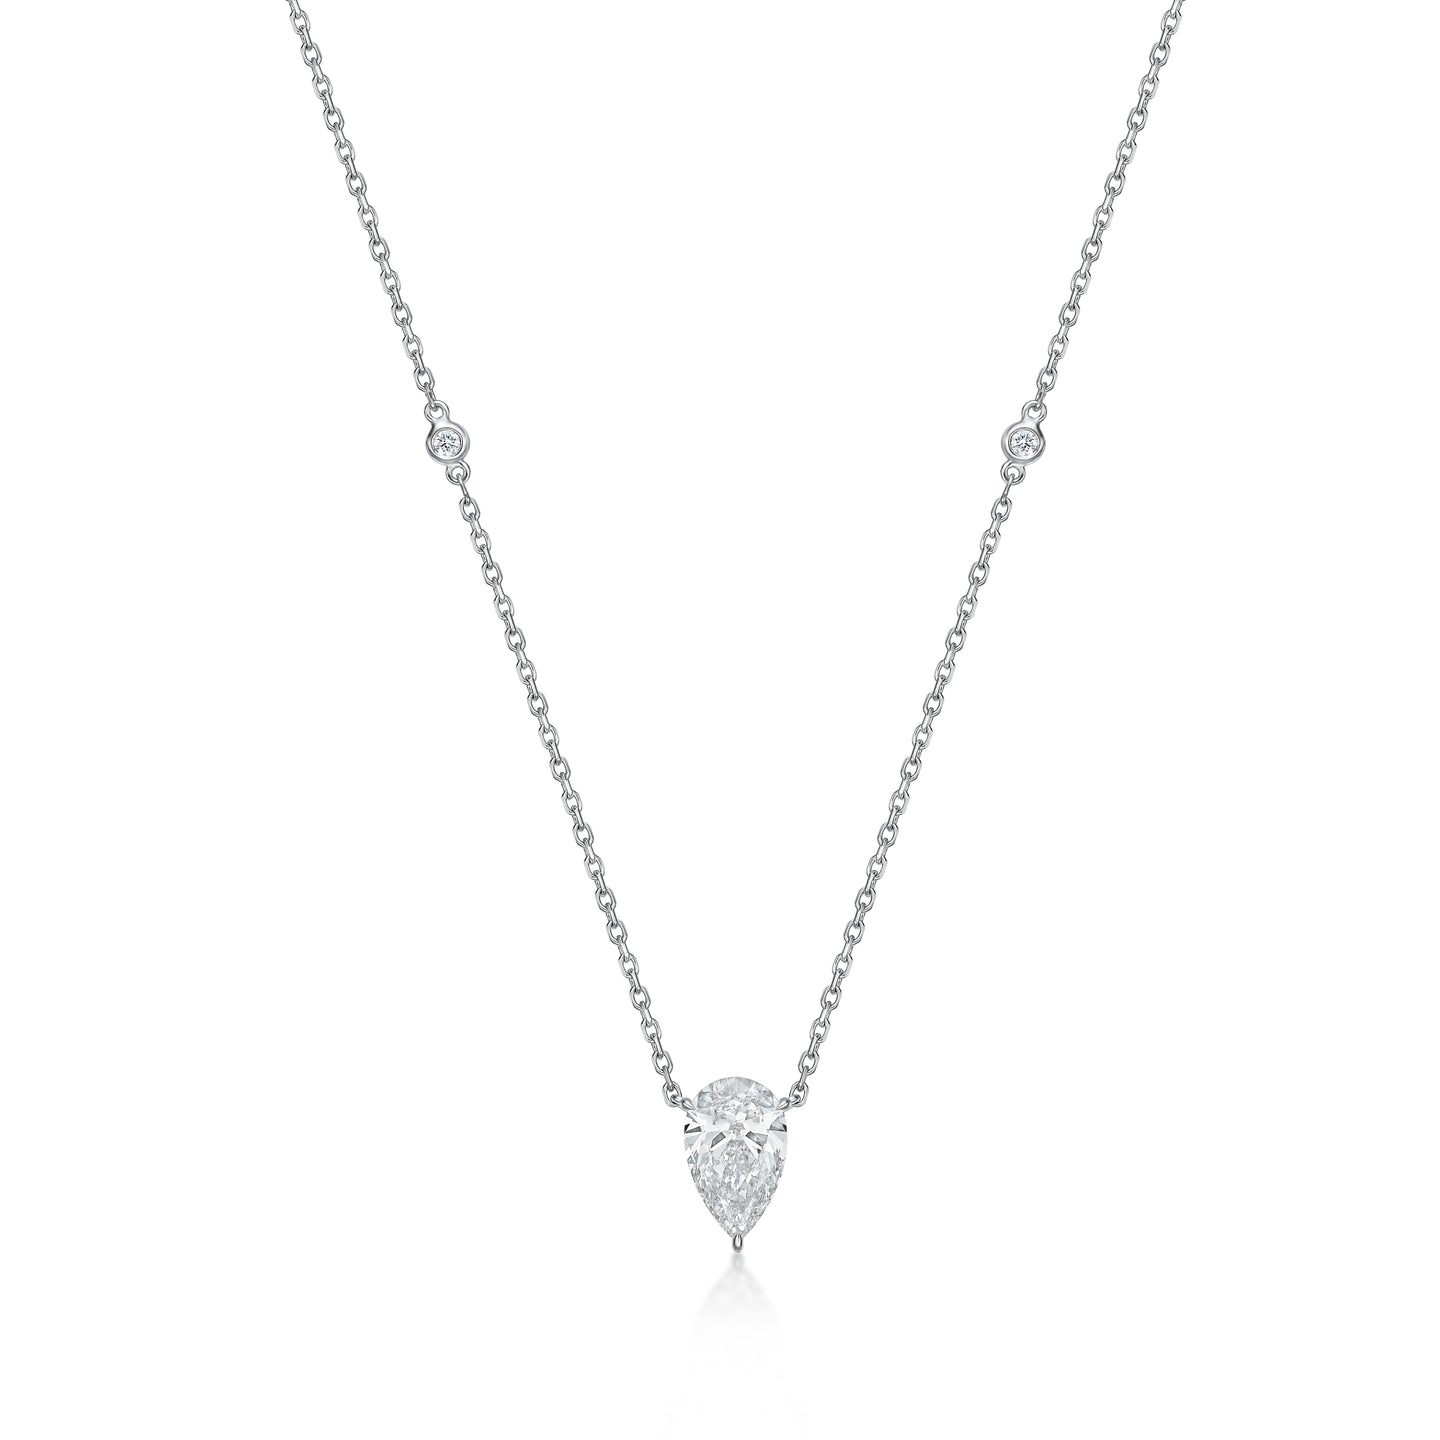 Pear Shape Diamond Necklace with Diamond Chain